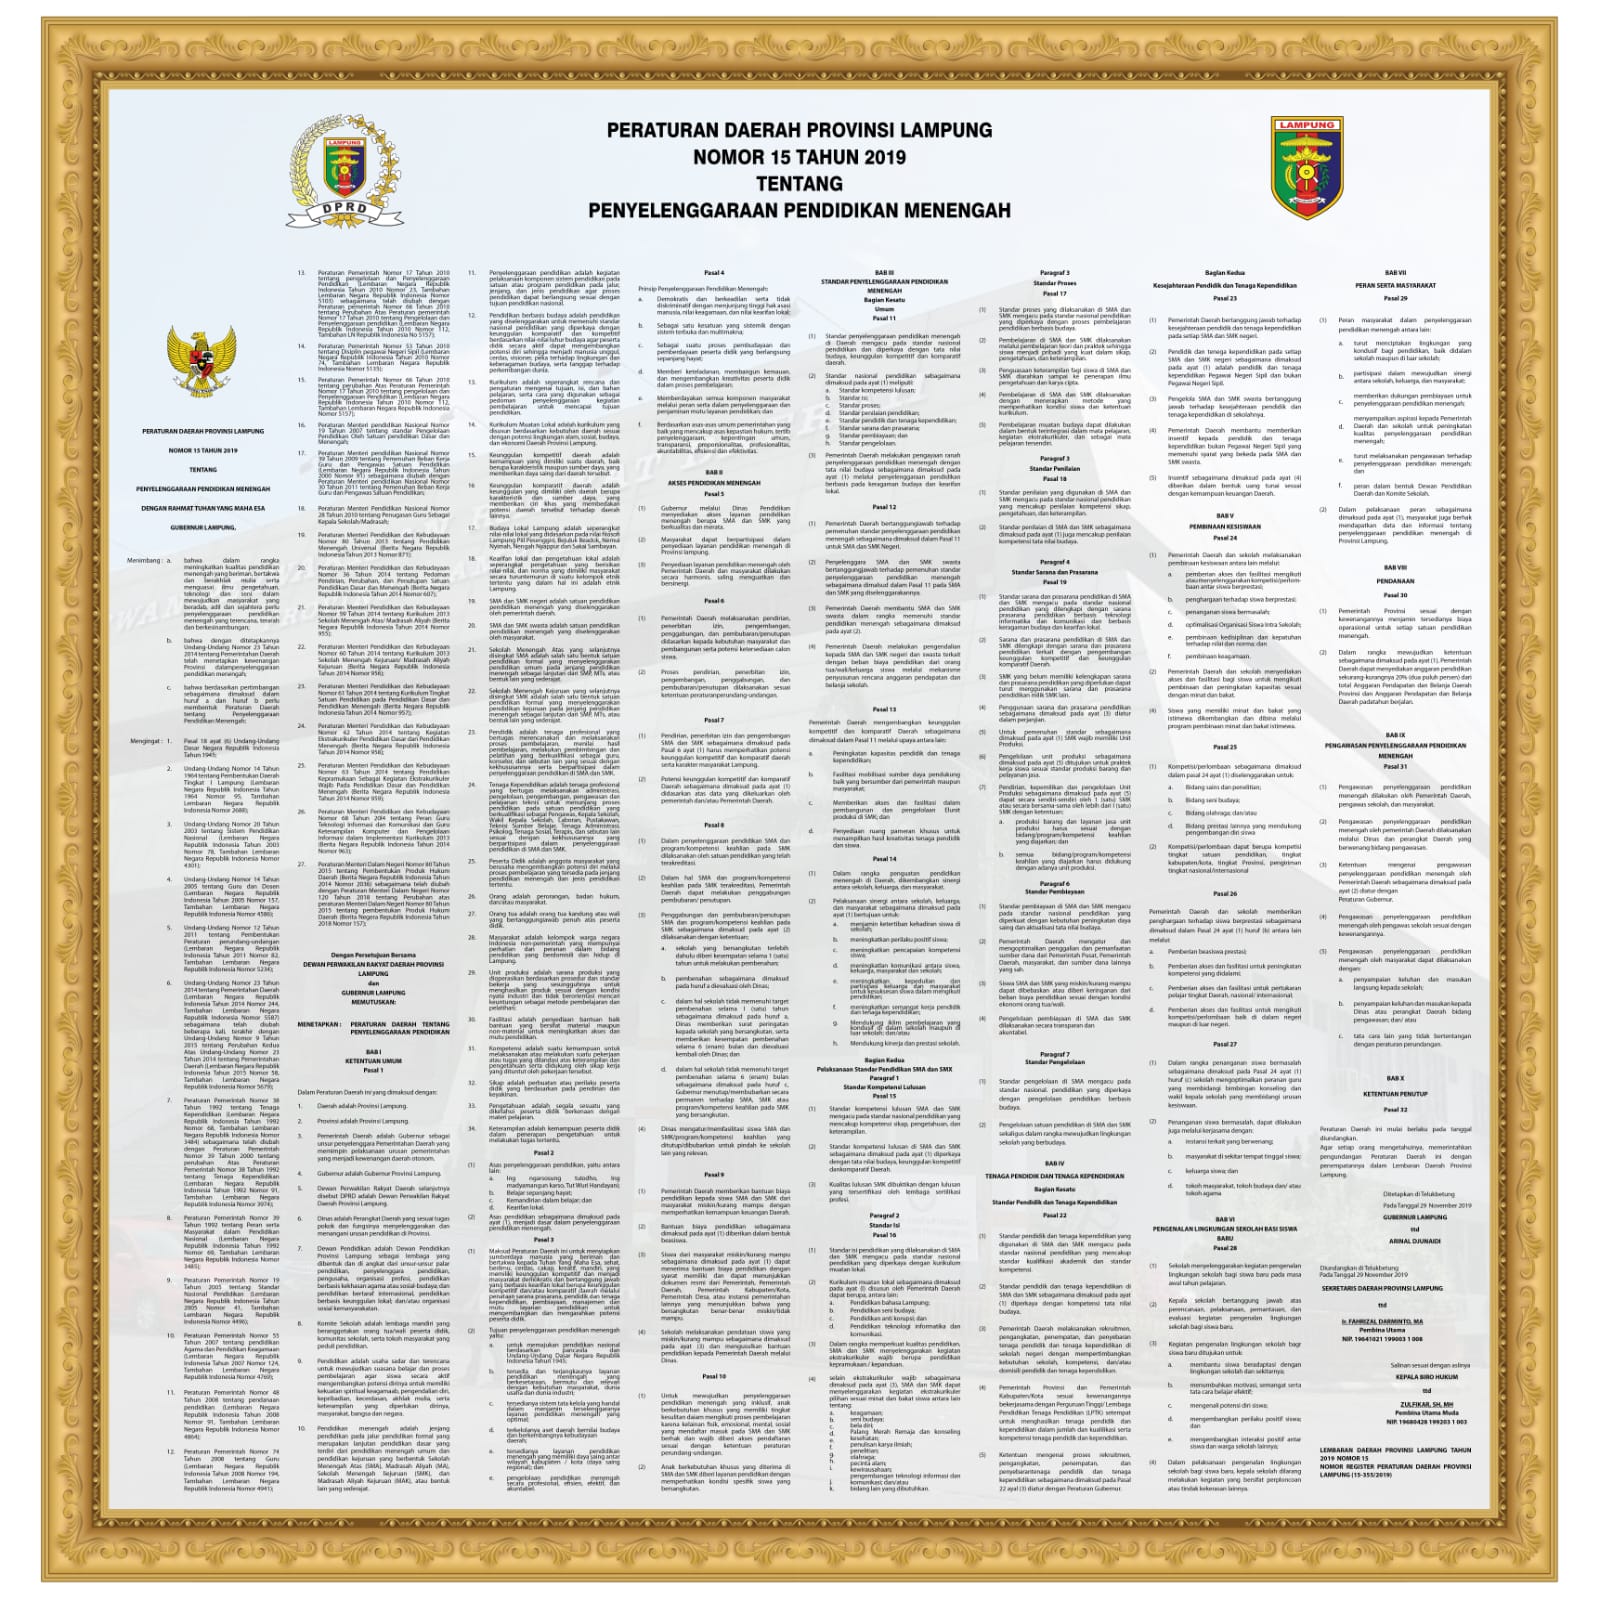 Peraturan Daerah Provinsi Lampung No.15 Tahun 2019